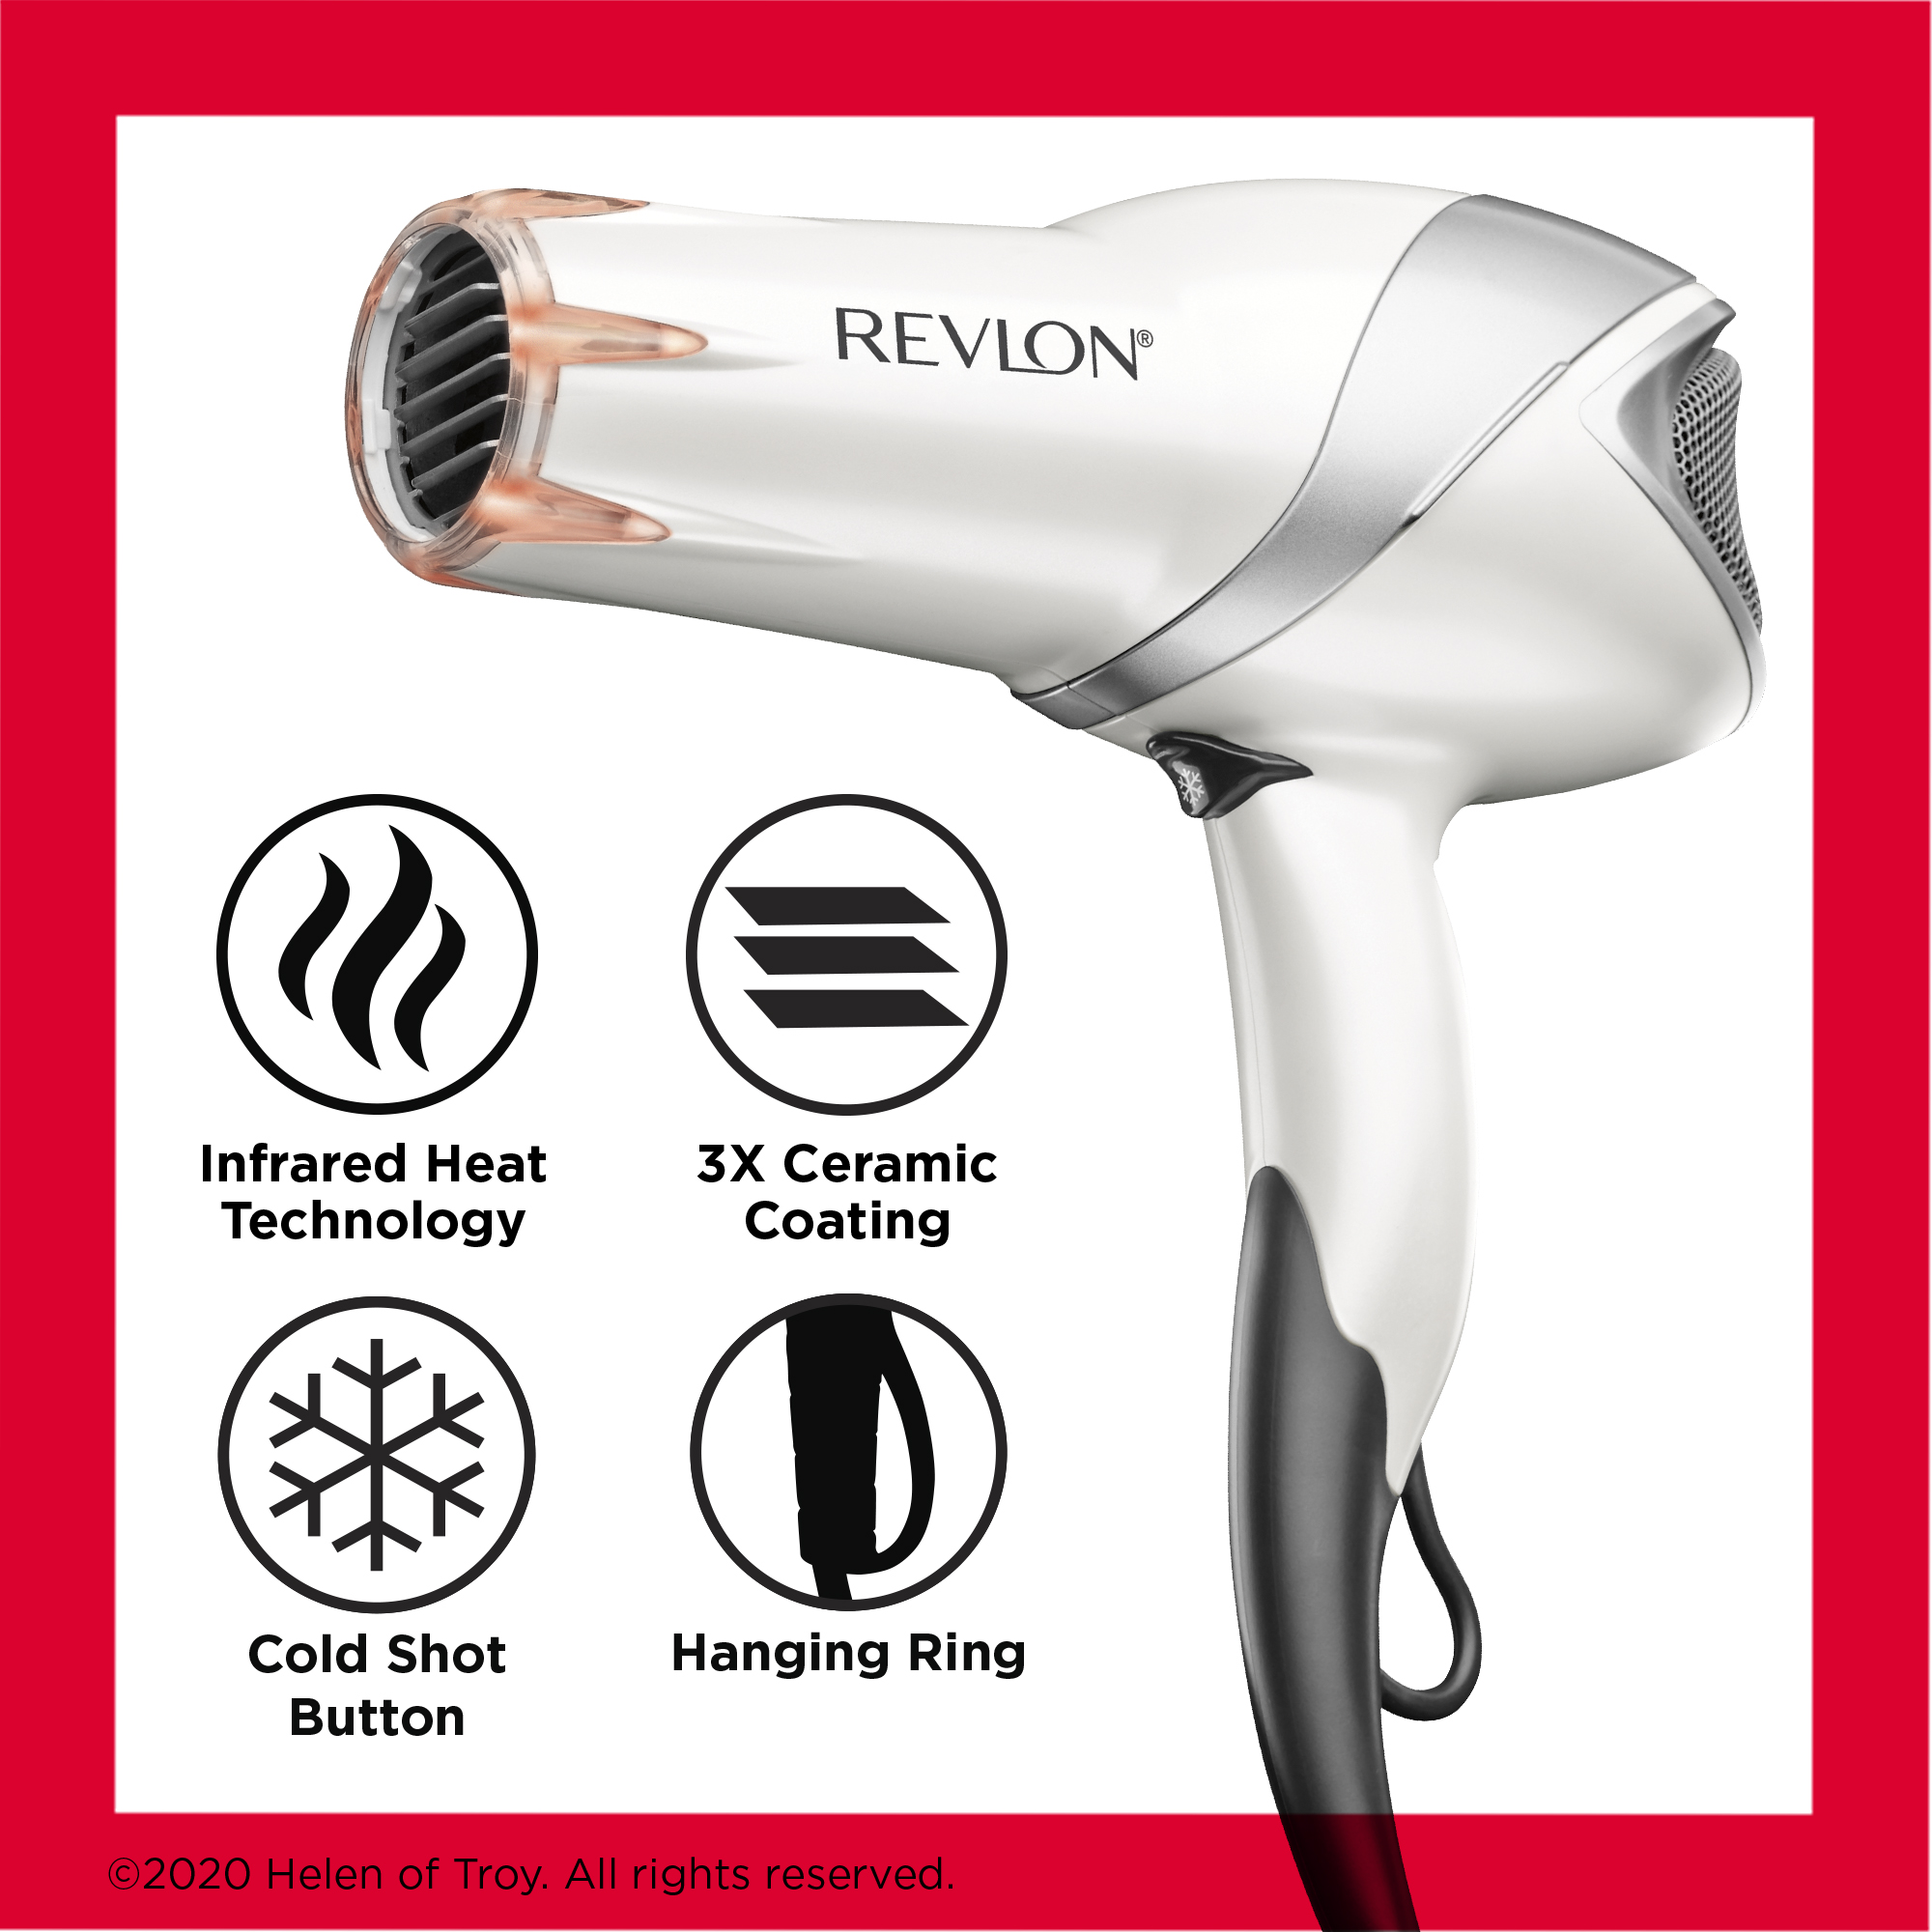 Revlon 1875W Infrared Heat + Ceramic Hair Dryer, White - image 5 of 6